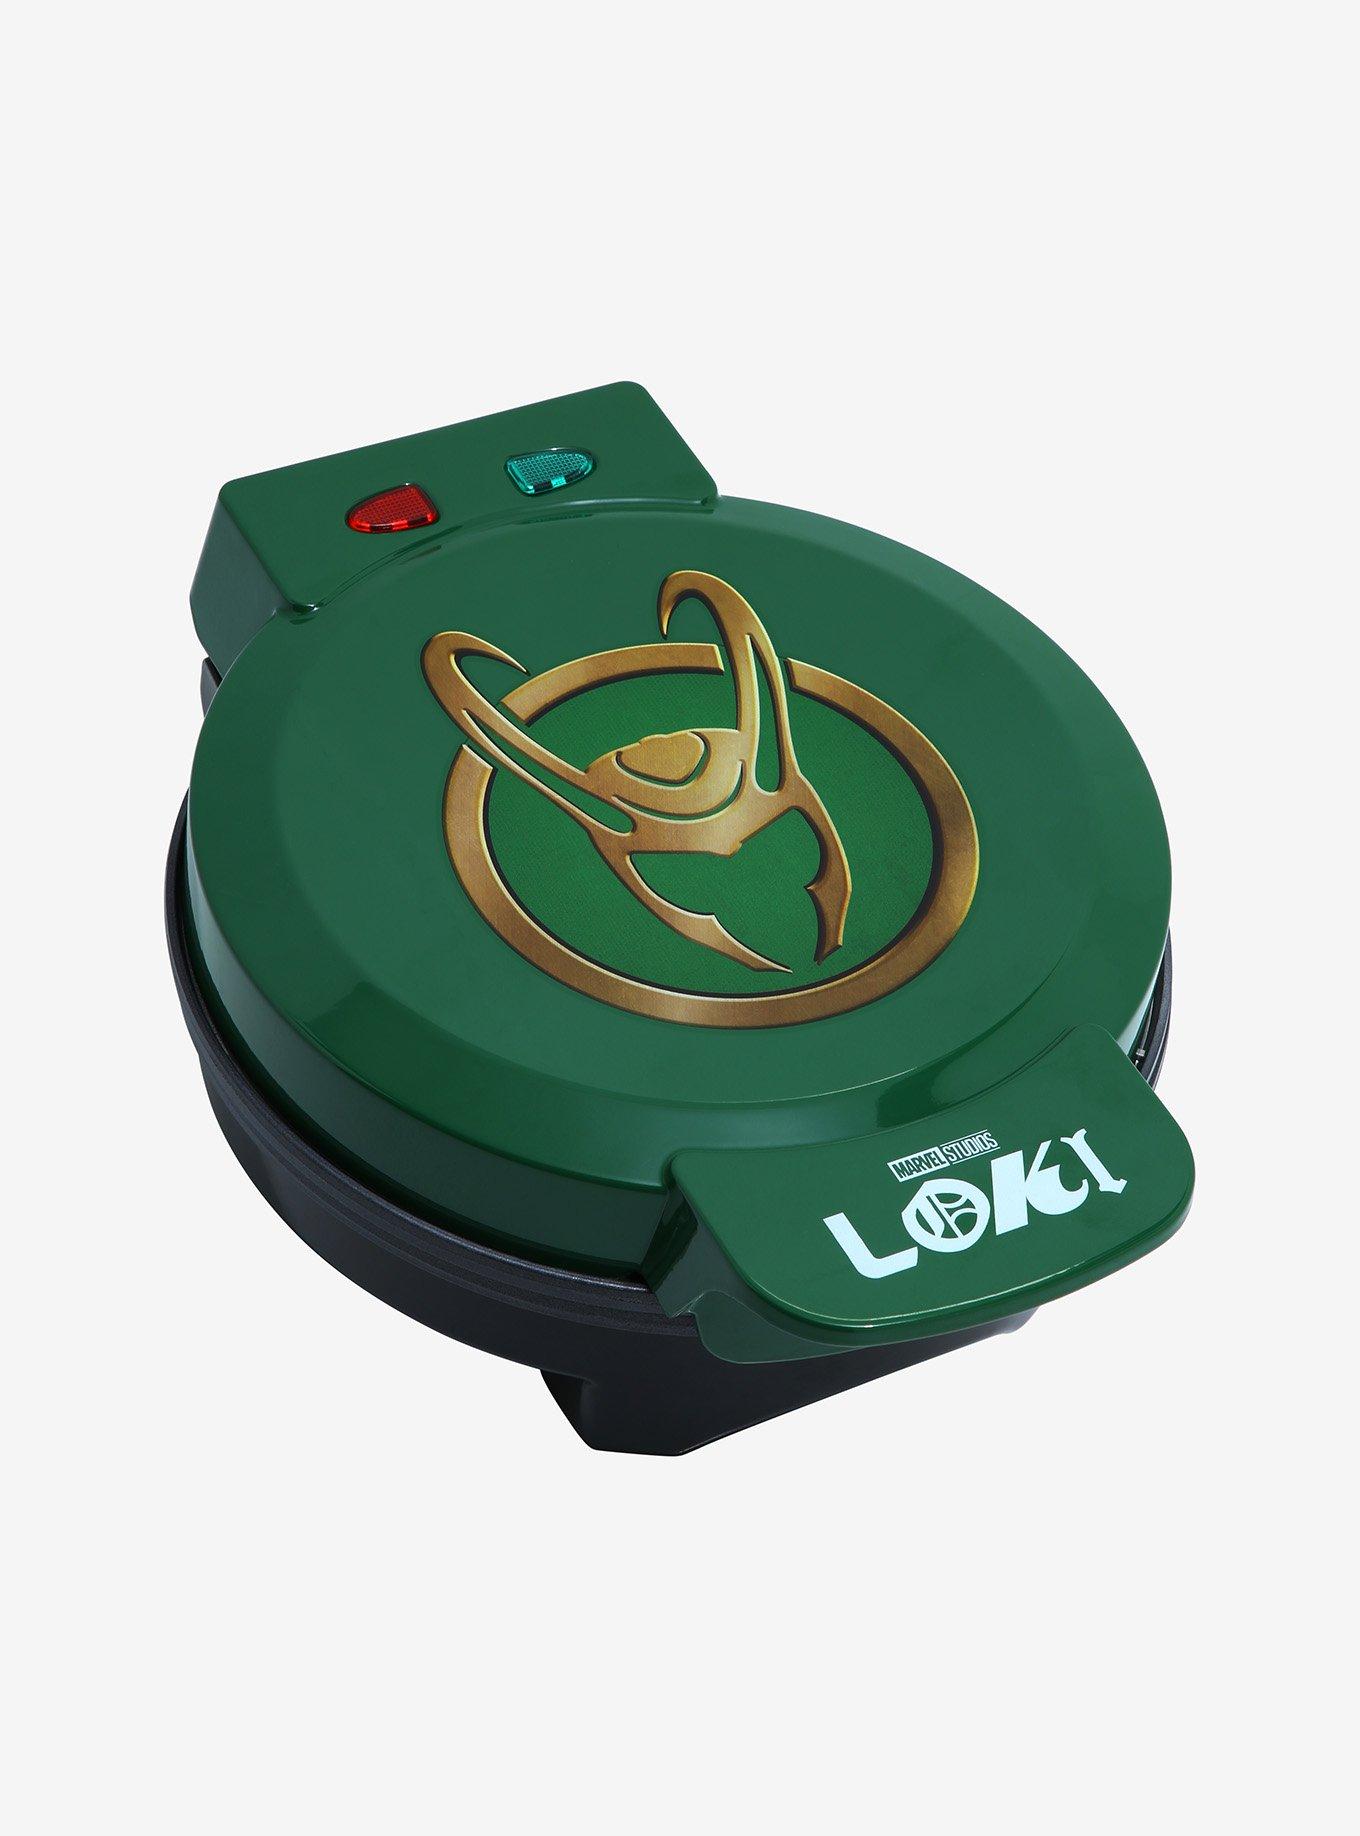 Uncanny Brands Marvel Loki Waffle Maker - Loki's Helmet on Your